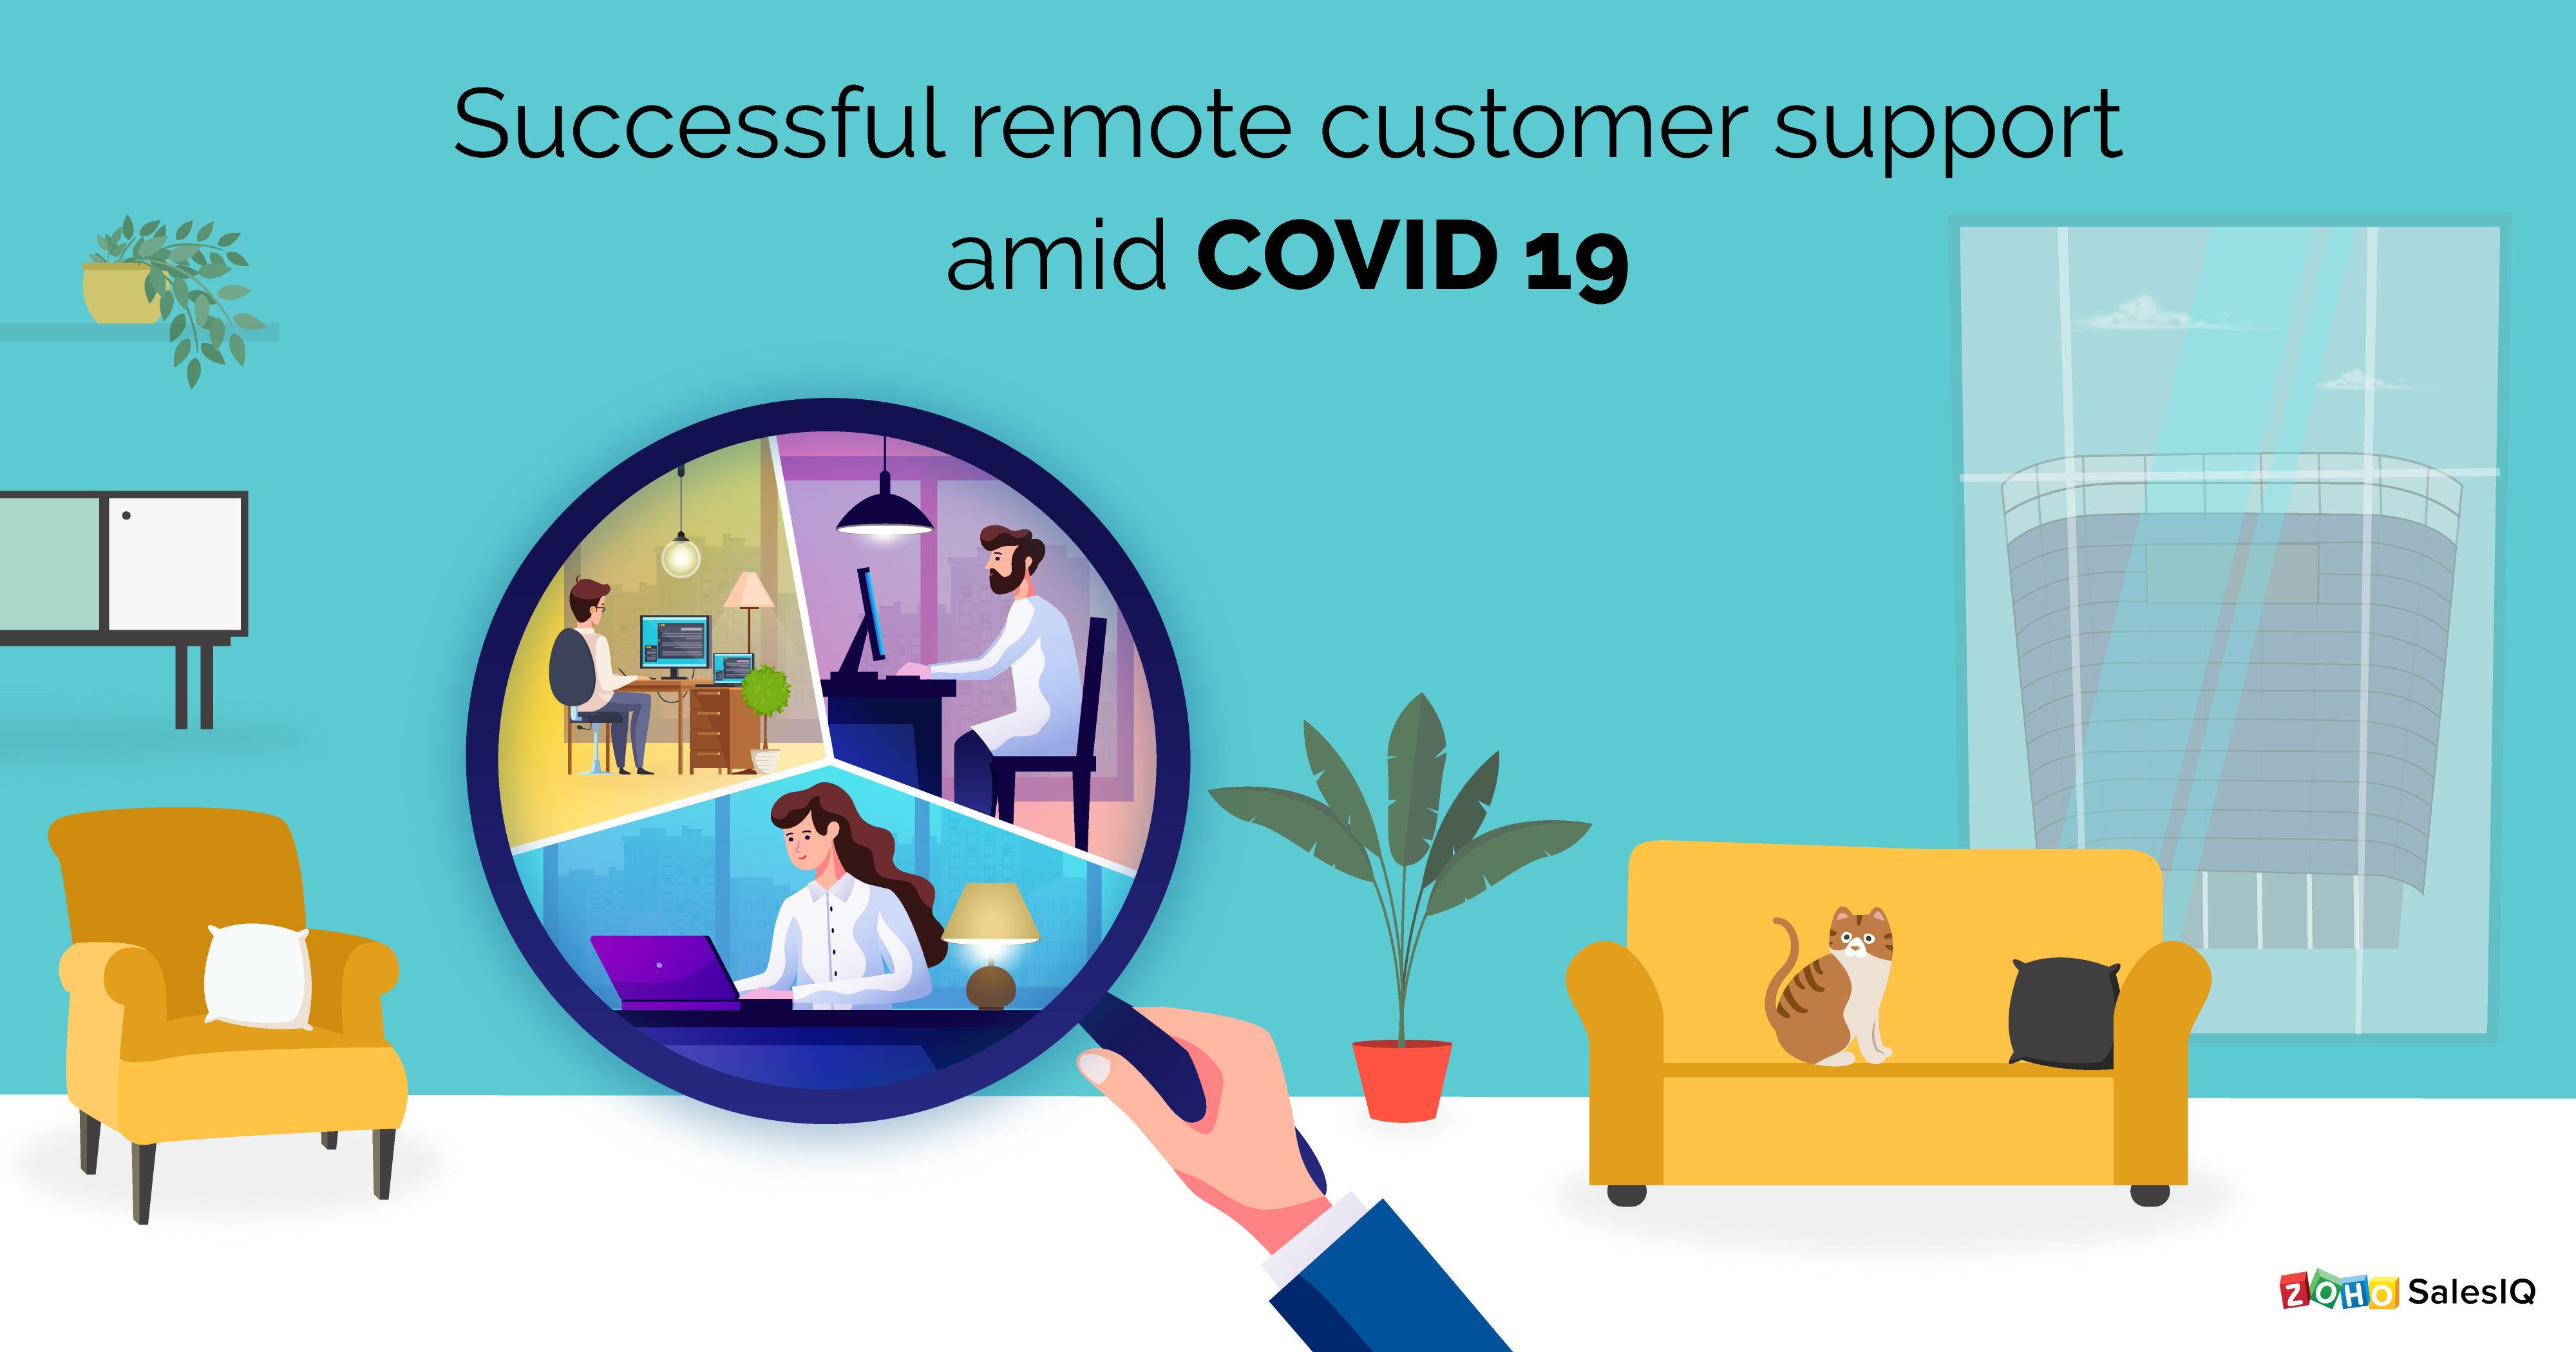 Remote customer support